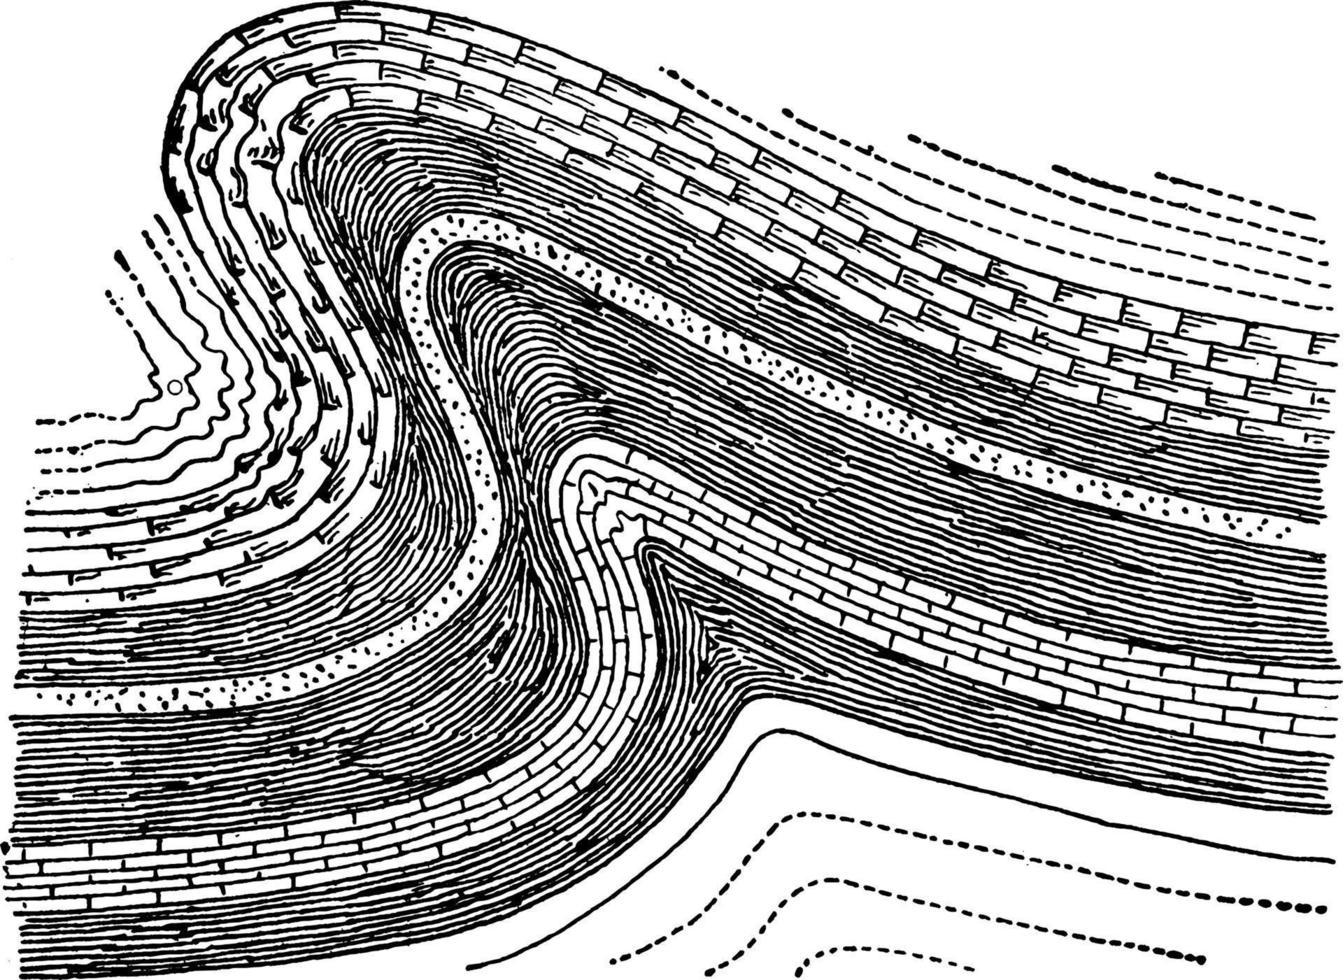 Overthrust Anticline Folds, vintage illustration vector